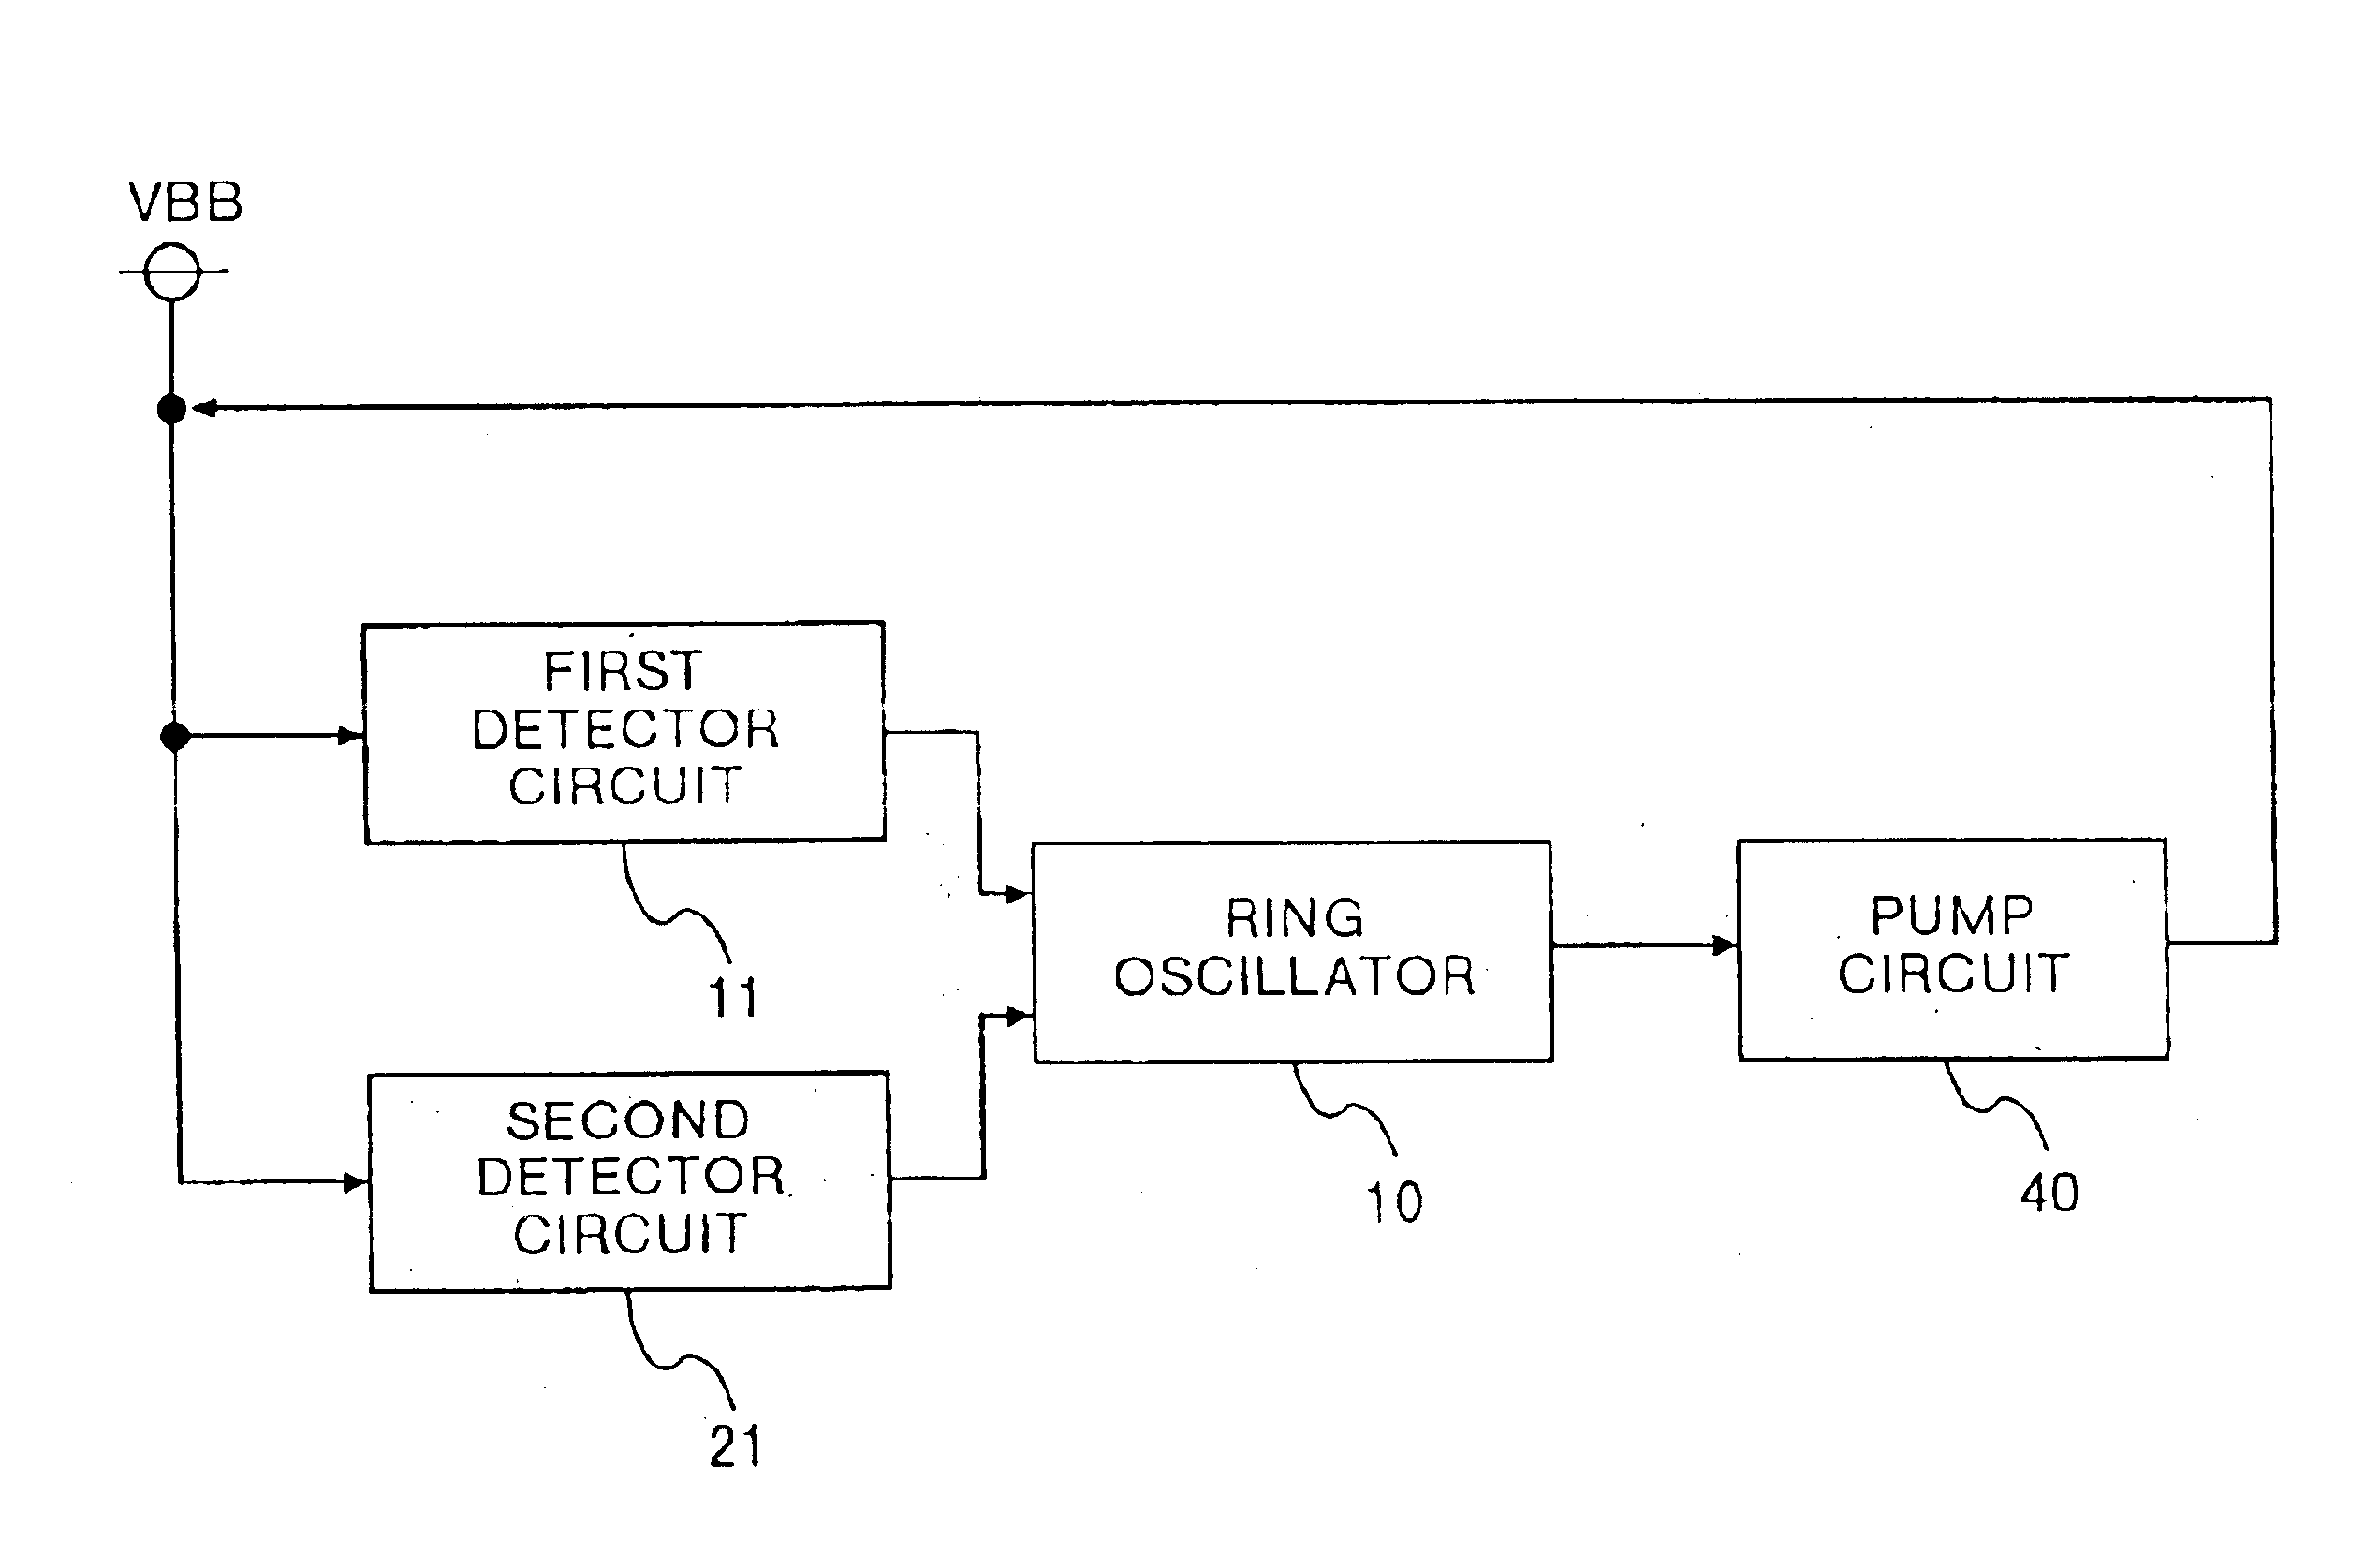 Substrate bias voltage generating circuit